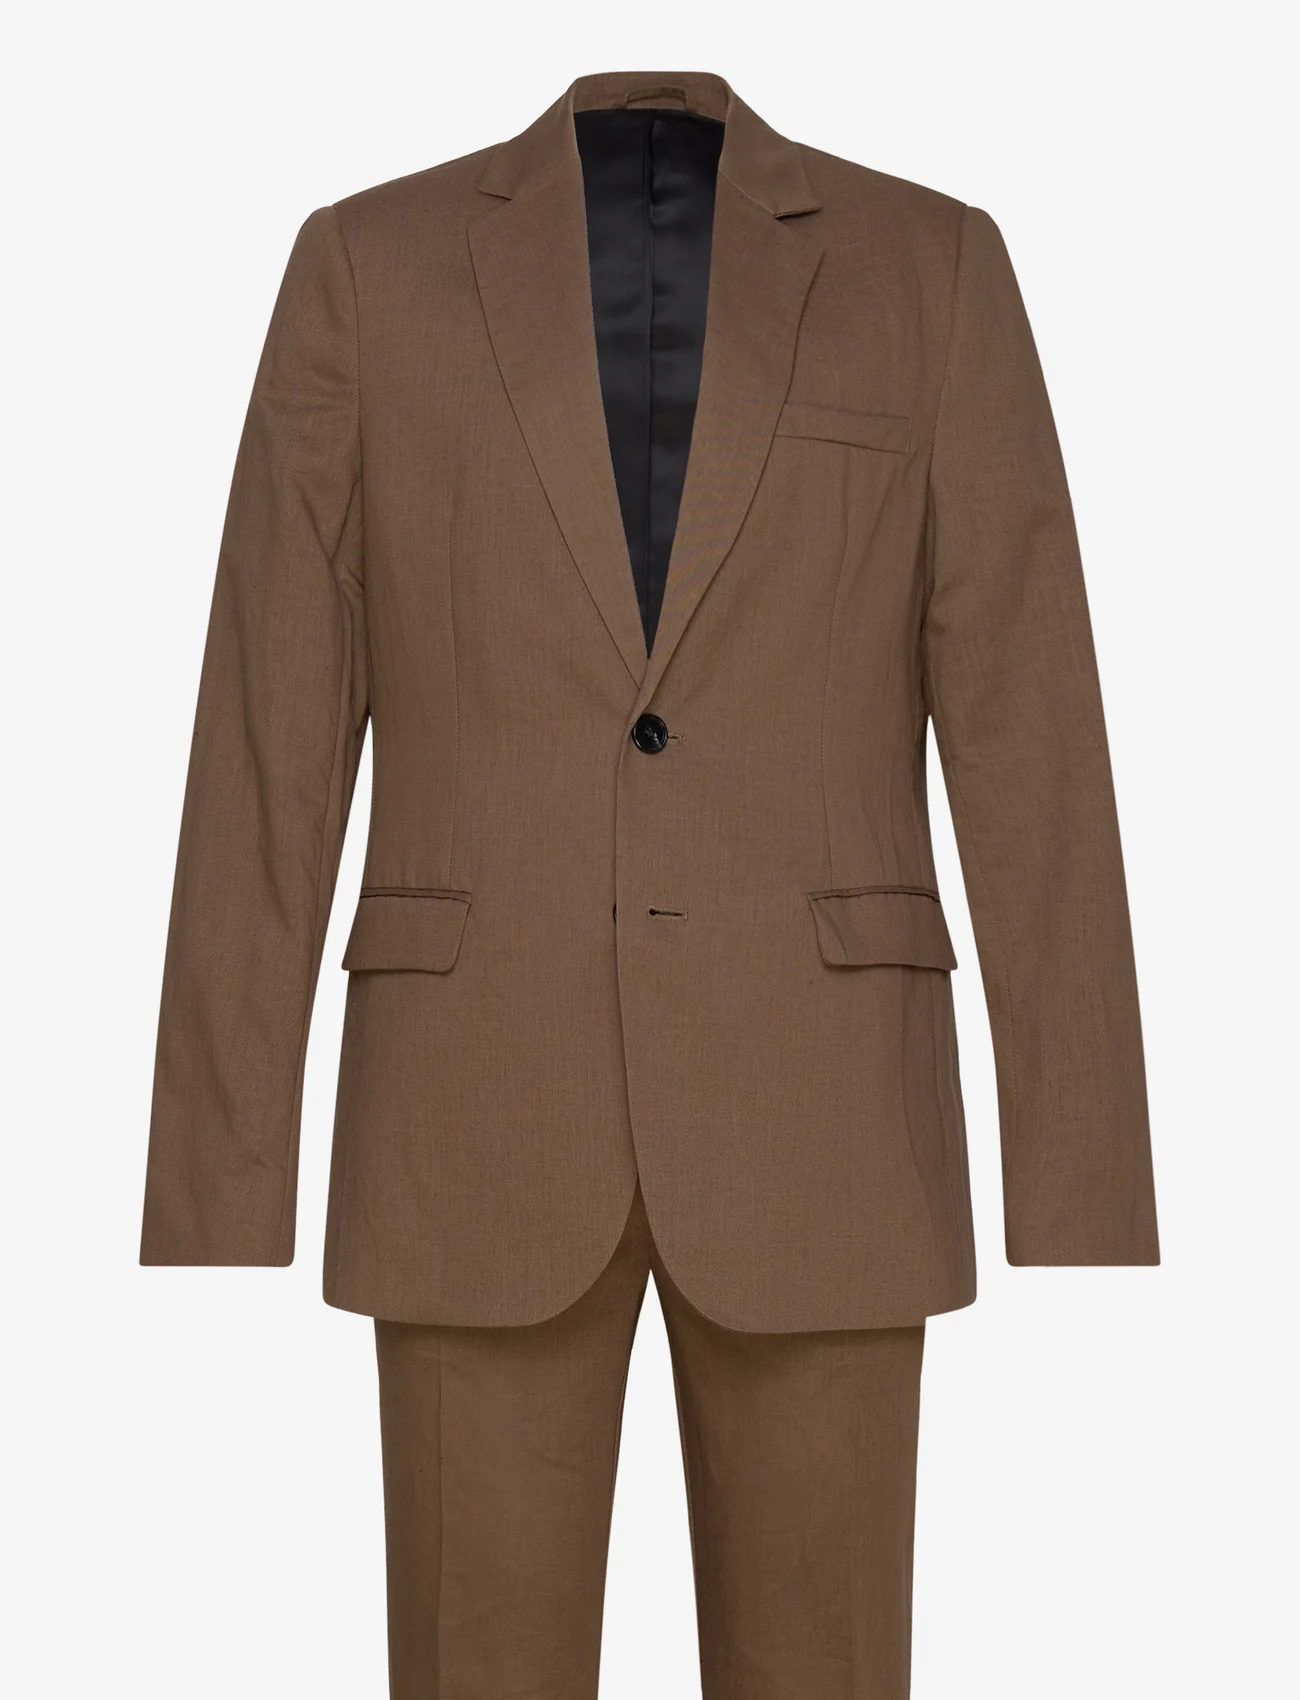 Bruuns Bazaar - LinoBBCarlAxel suit - kostuums met dubbele knopen - toffee - 0